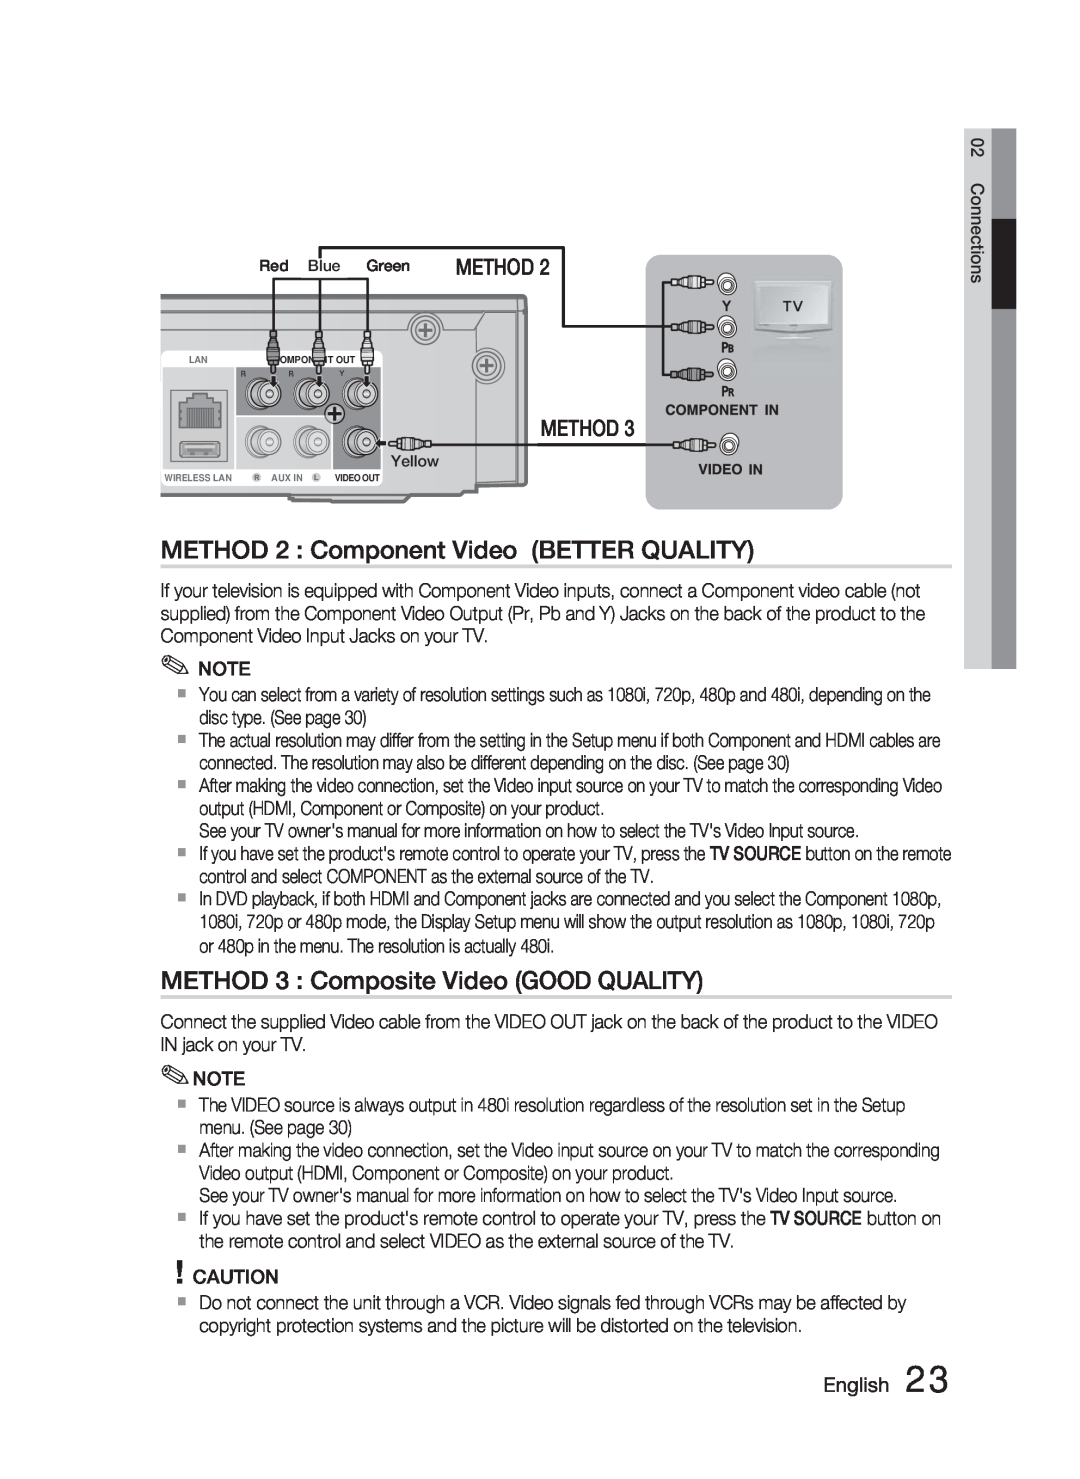 Samsung HT-C5500 METHOD 2 Component Video BETTER QUALITY, METHOD 3 Composite Video GOOD QUALITY, Method, English 